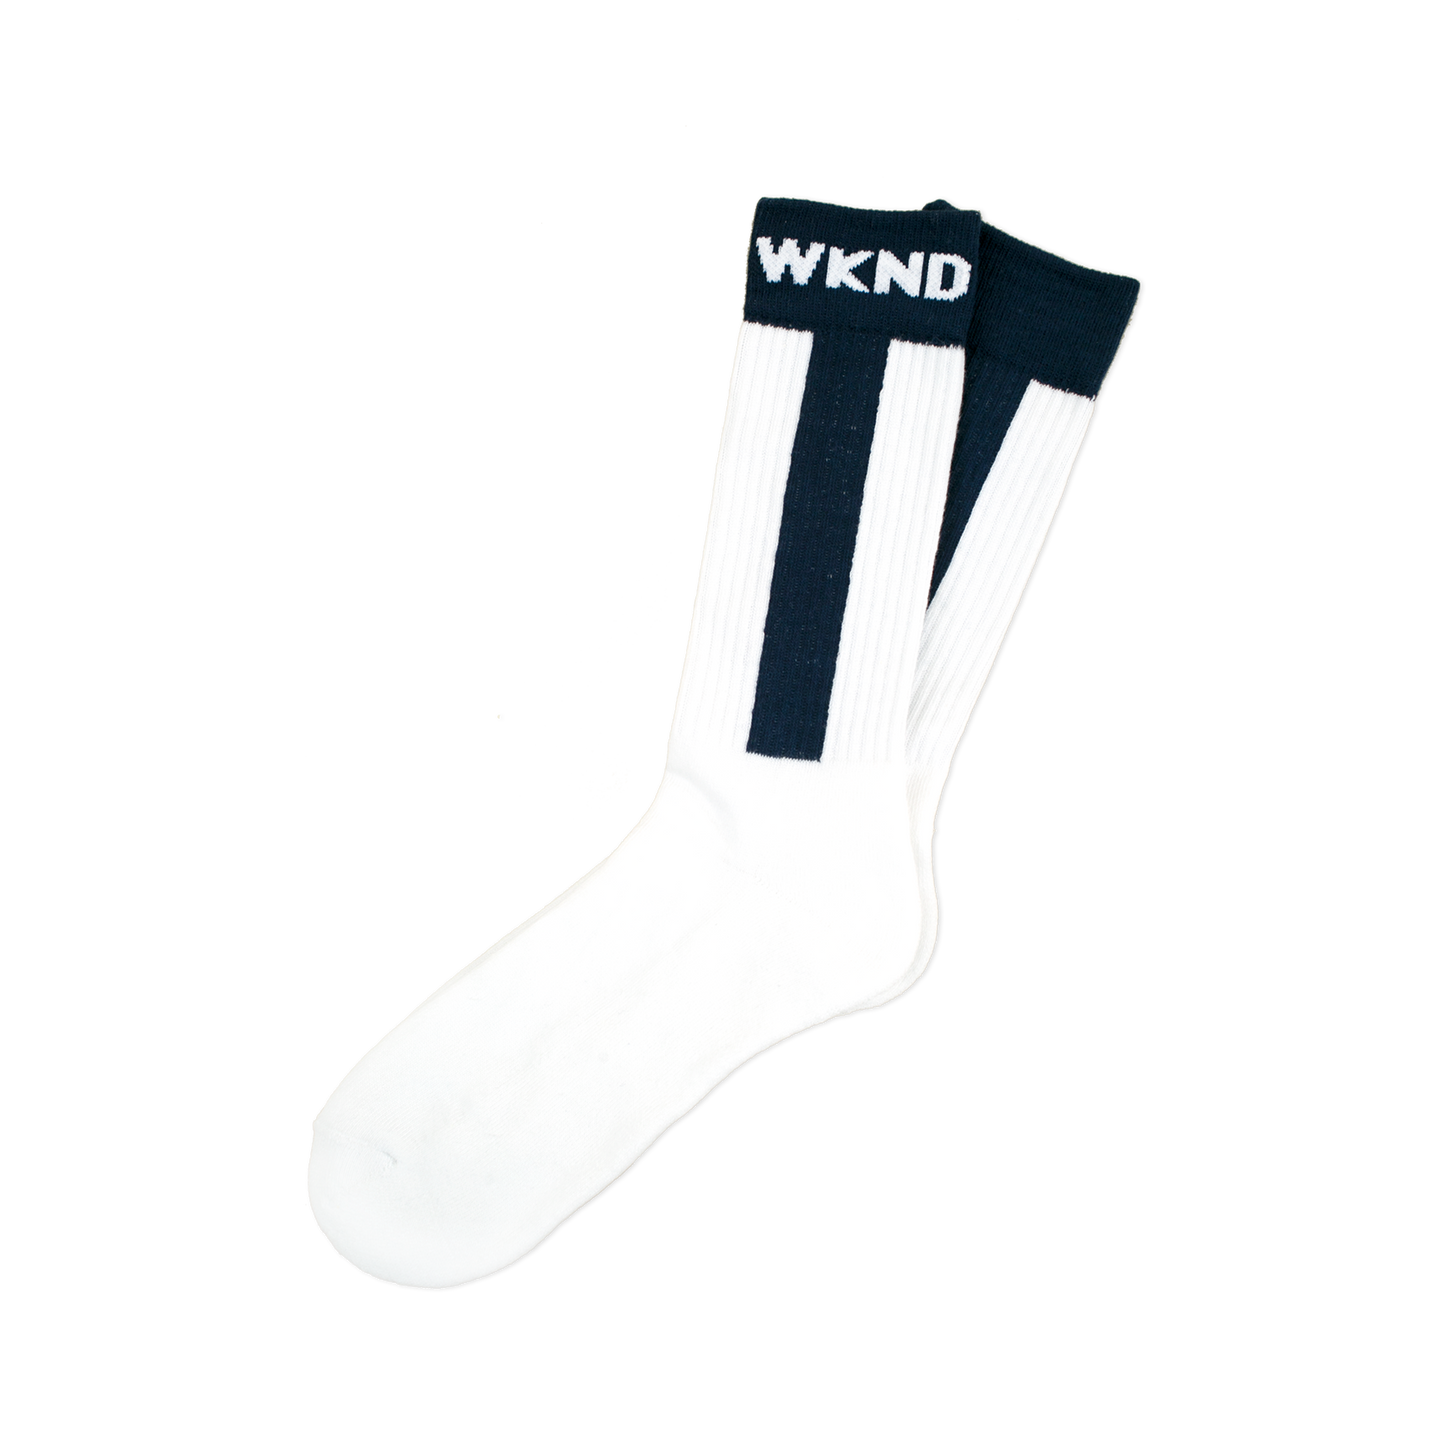 WKND BASEBALL SOCKS - NAVY/WHITE